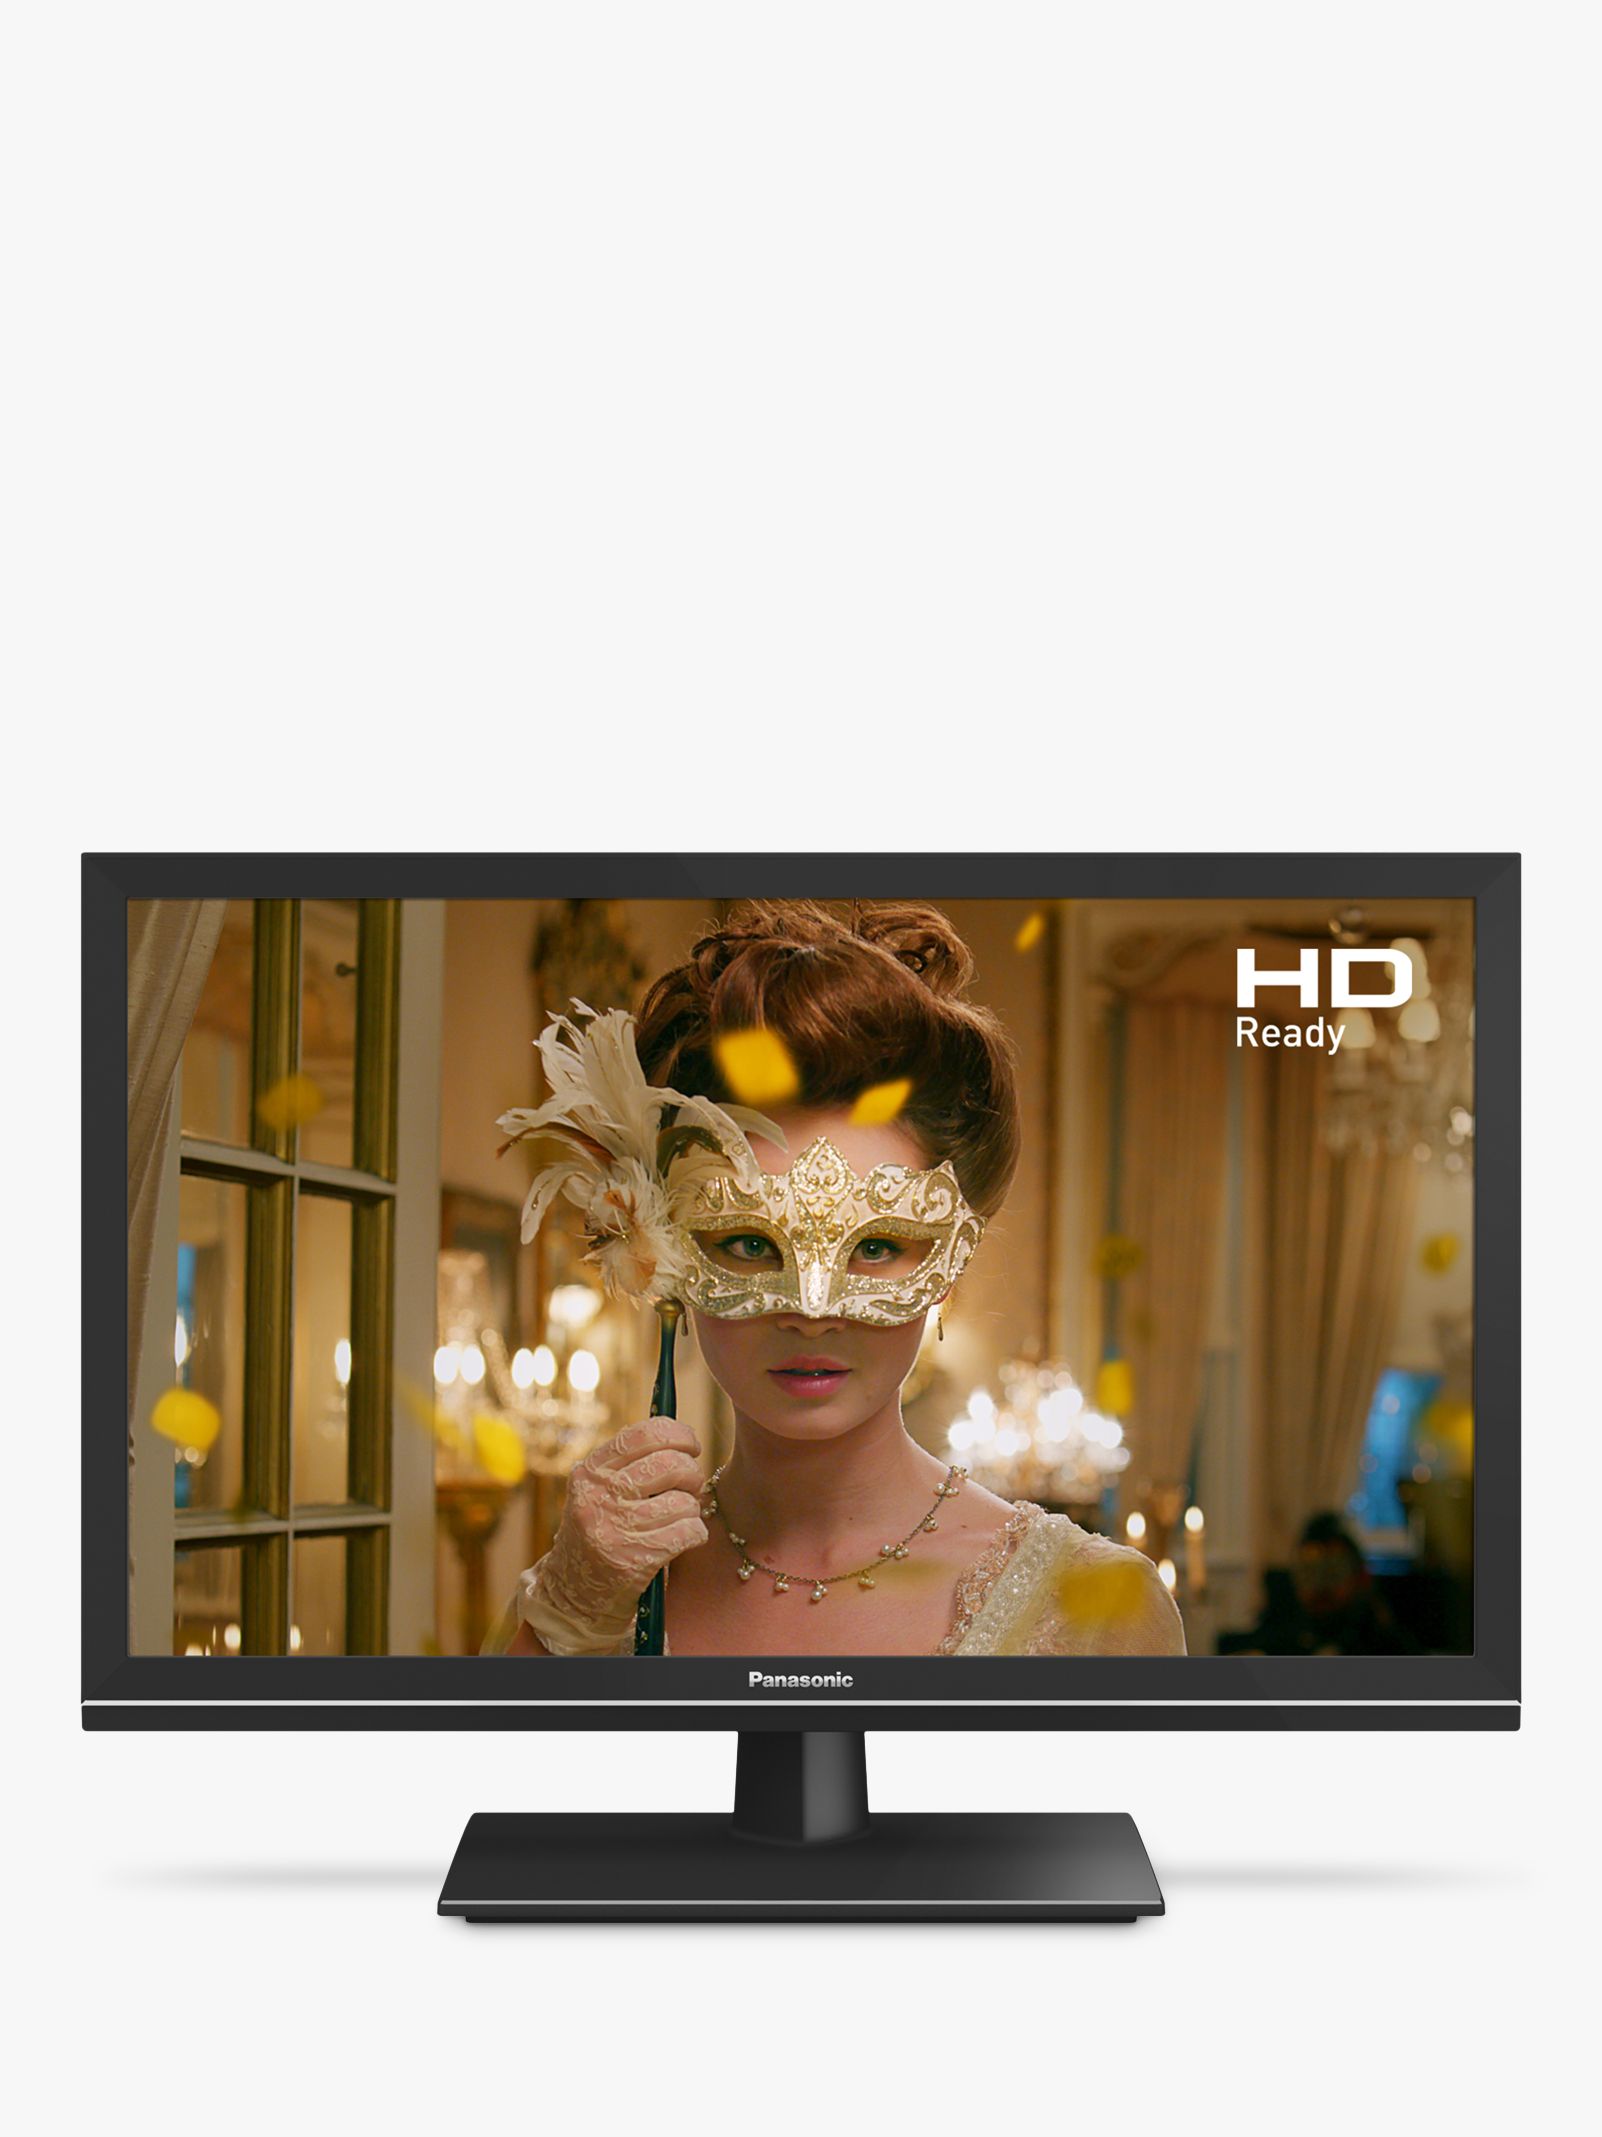 Panasonic TX-24FS500B LED HDR HD Ready 720p Smart TV, 24 with Freeview Play, Black